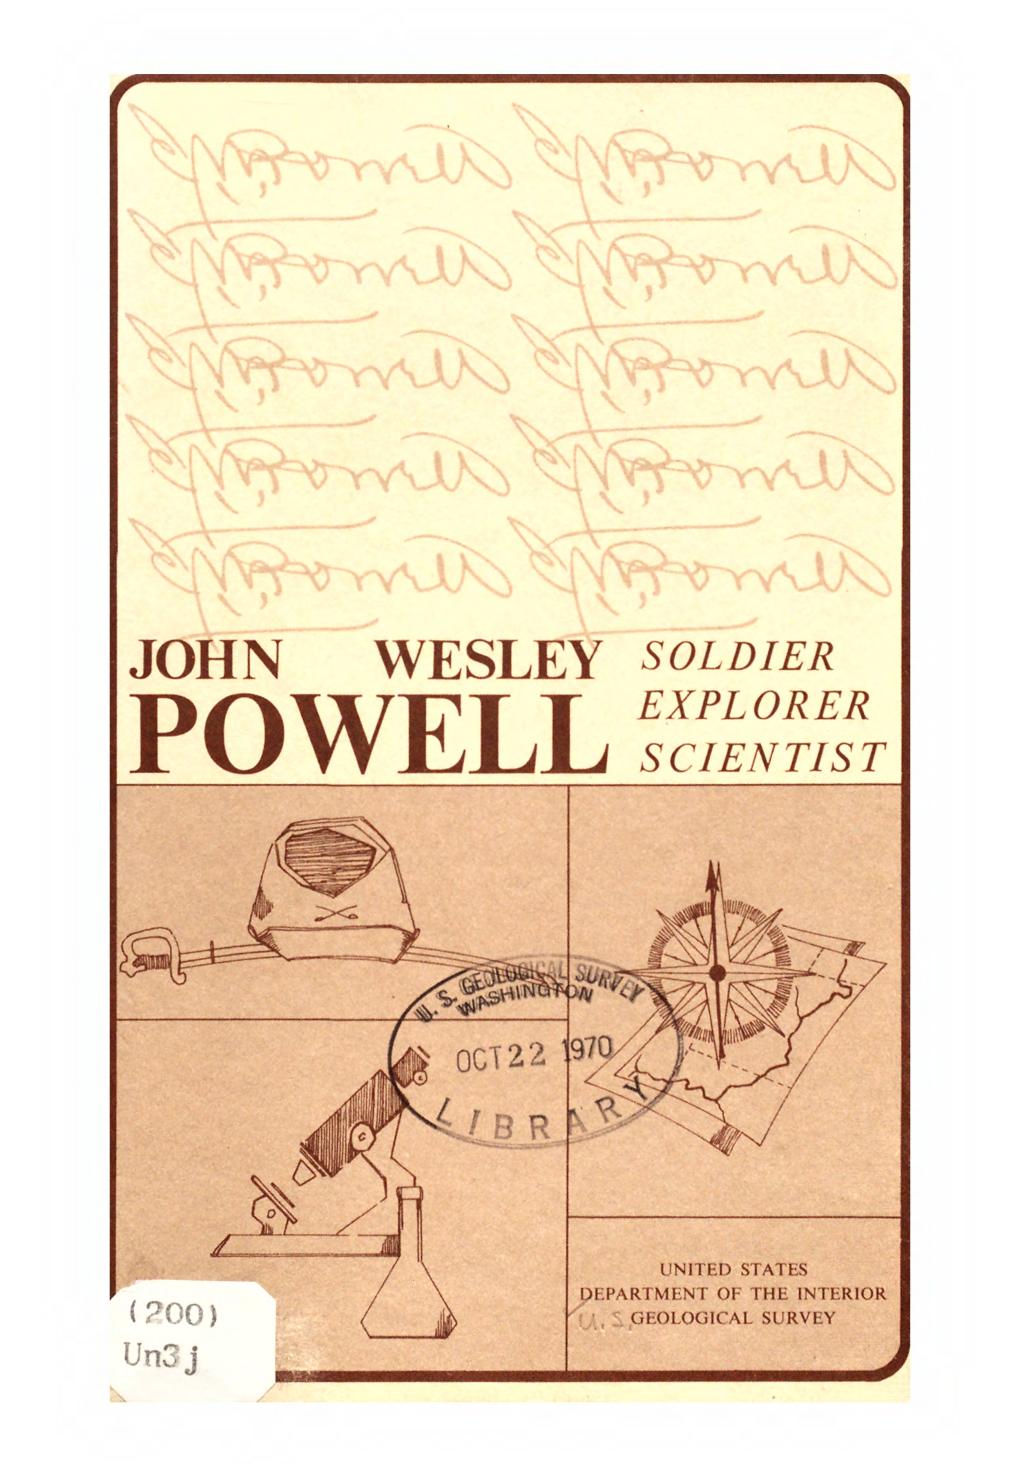 John Wesley Soldier Explorer Powell Scientist